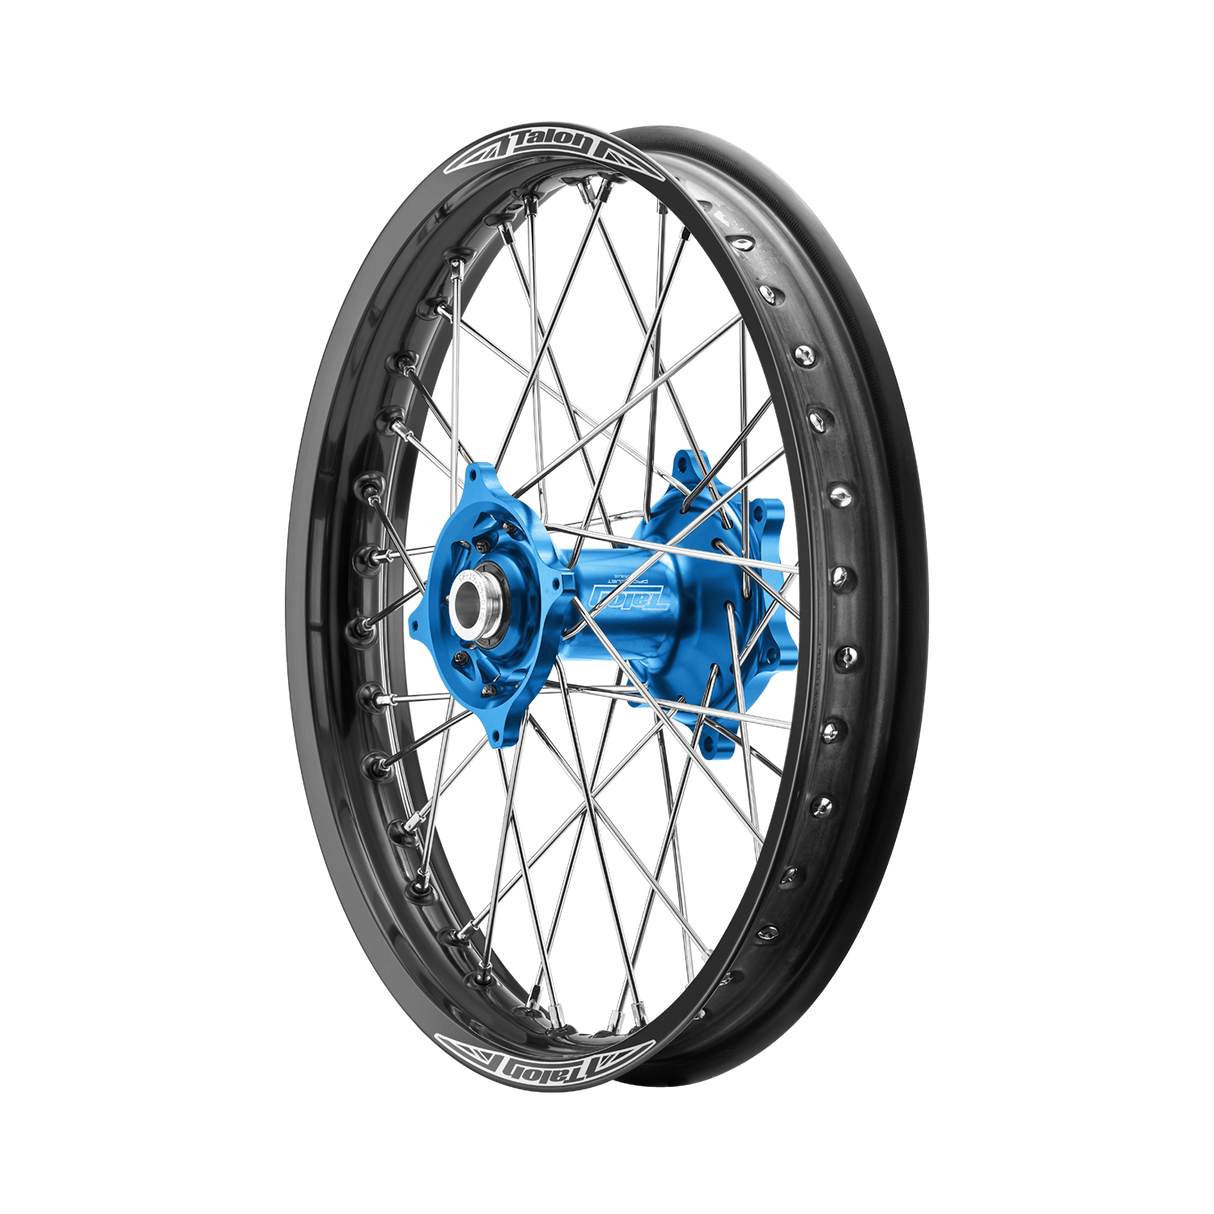 Talon 50cc Big Wheel Rear Wheel Black Rim - Blue Hubs